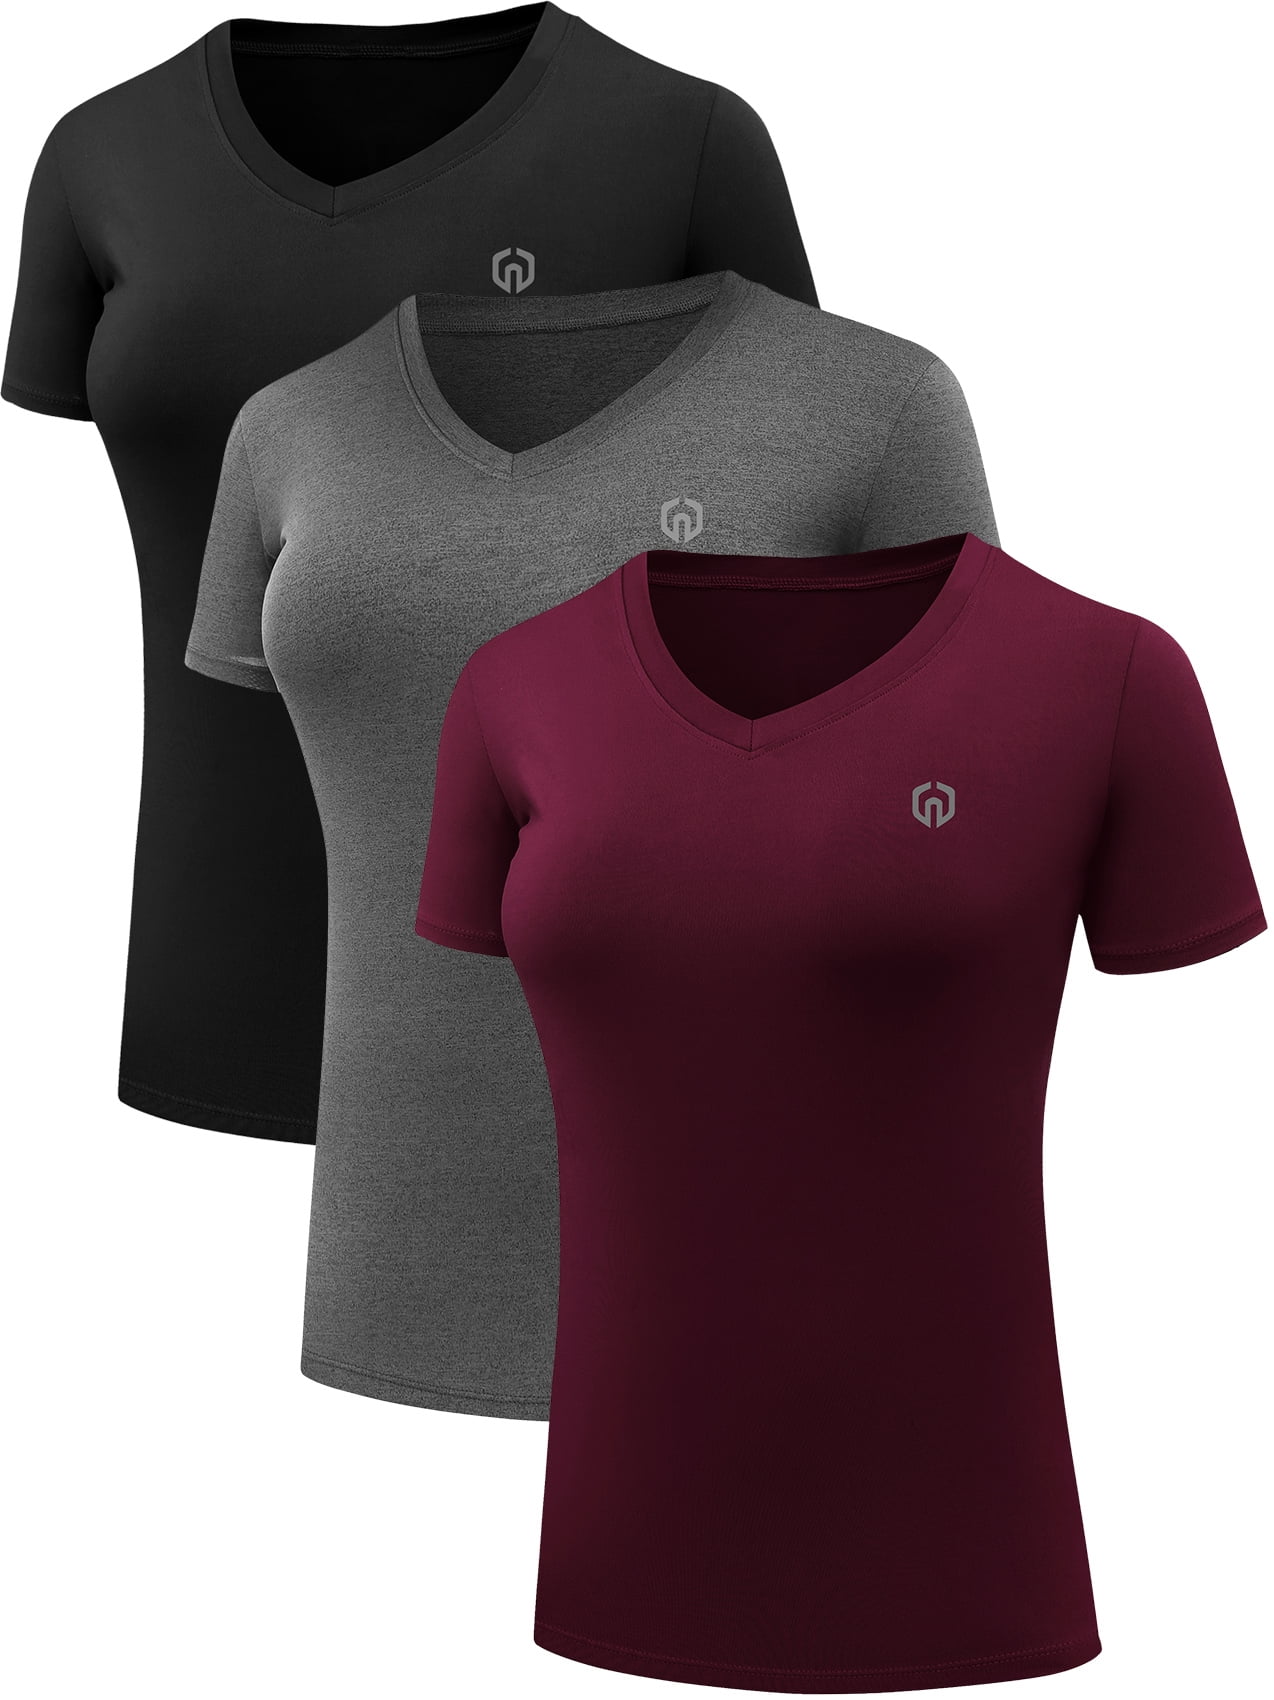 STORE99® Gray, XL : Yoga Shirt activewear for women Long Sleeve